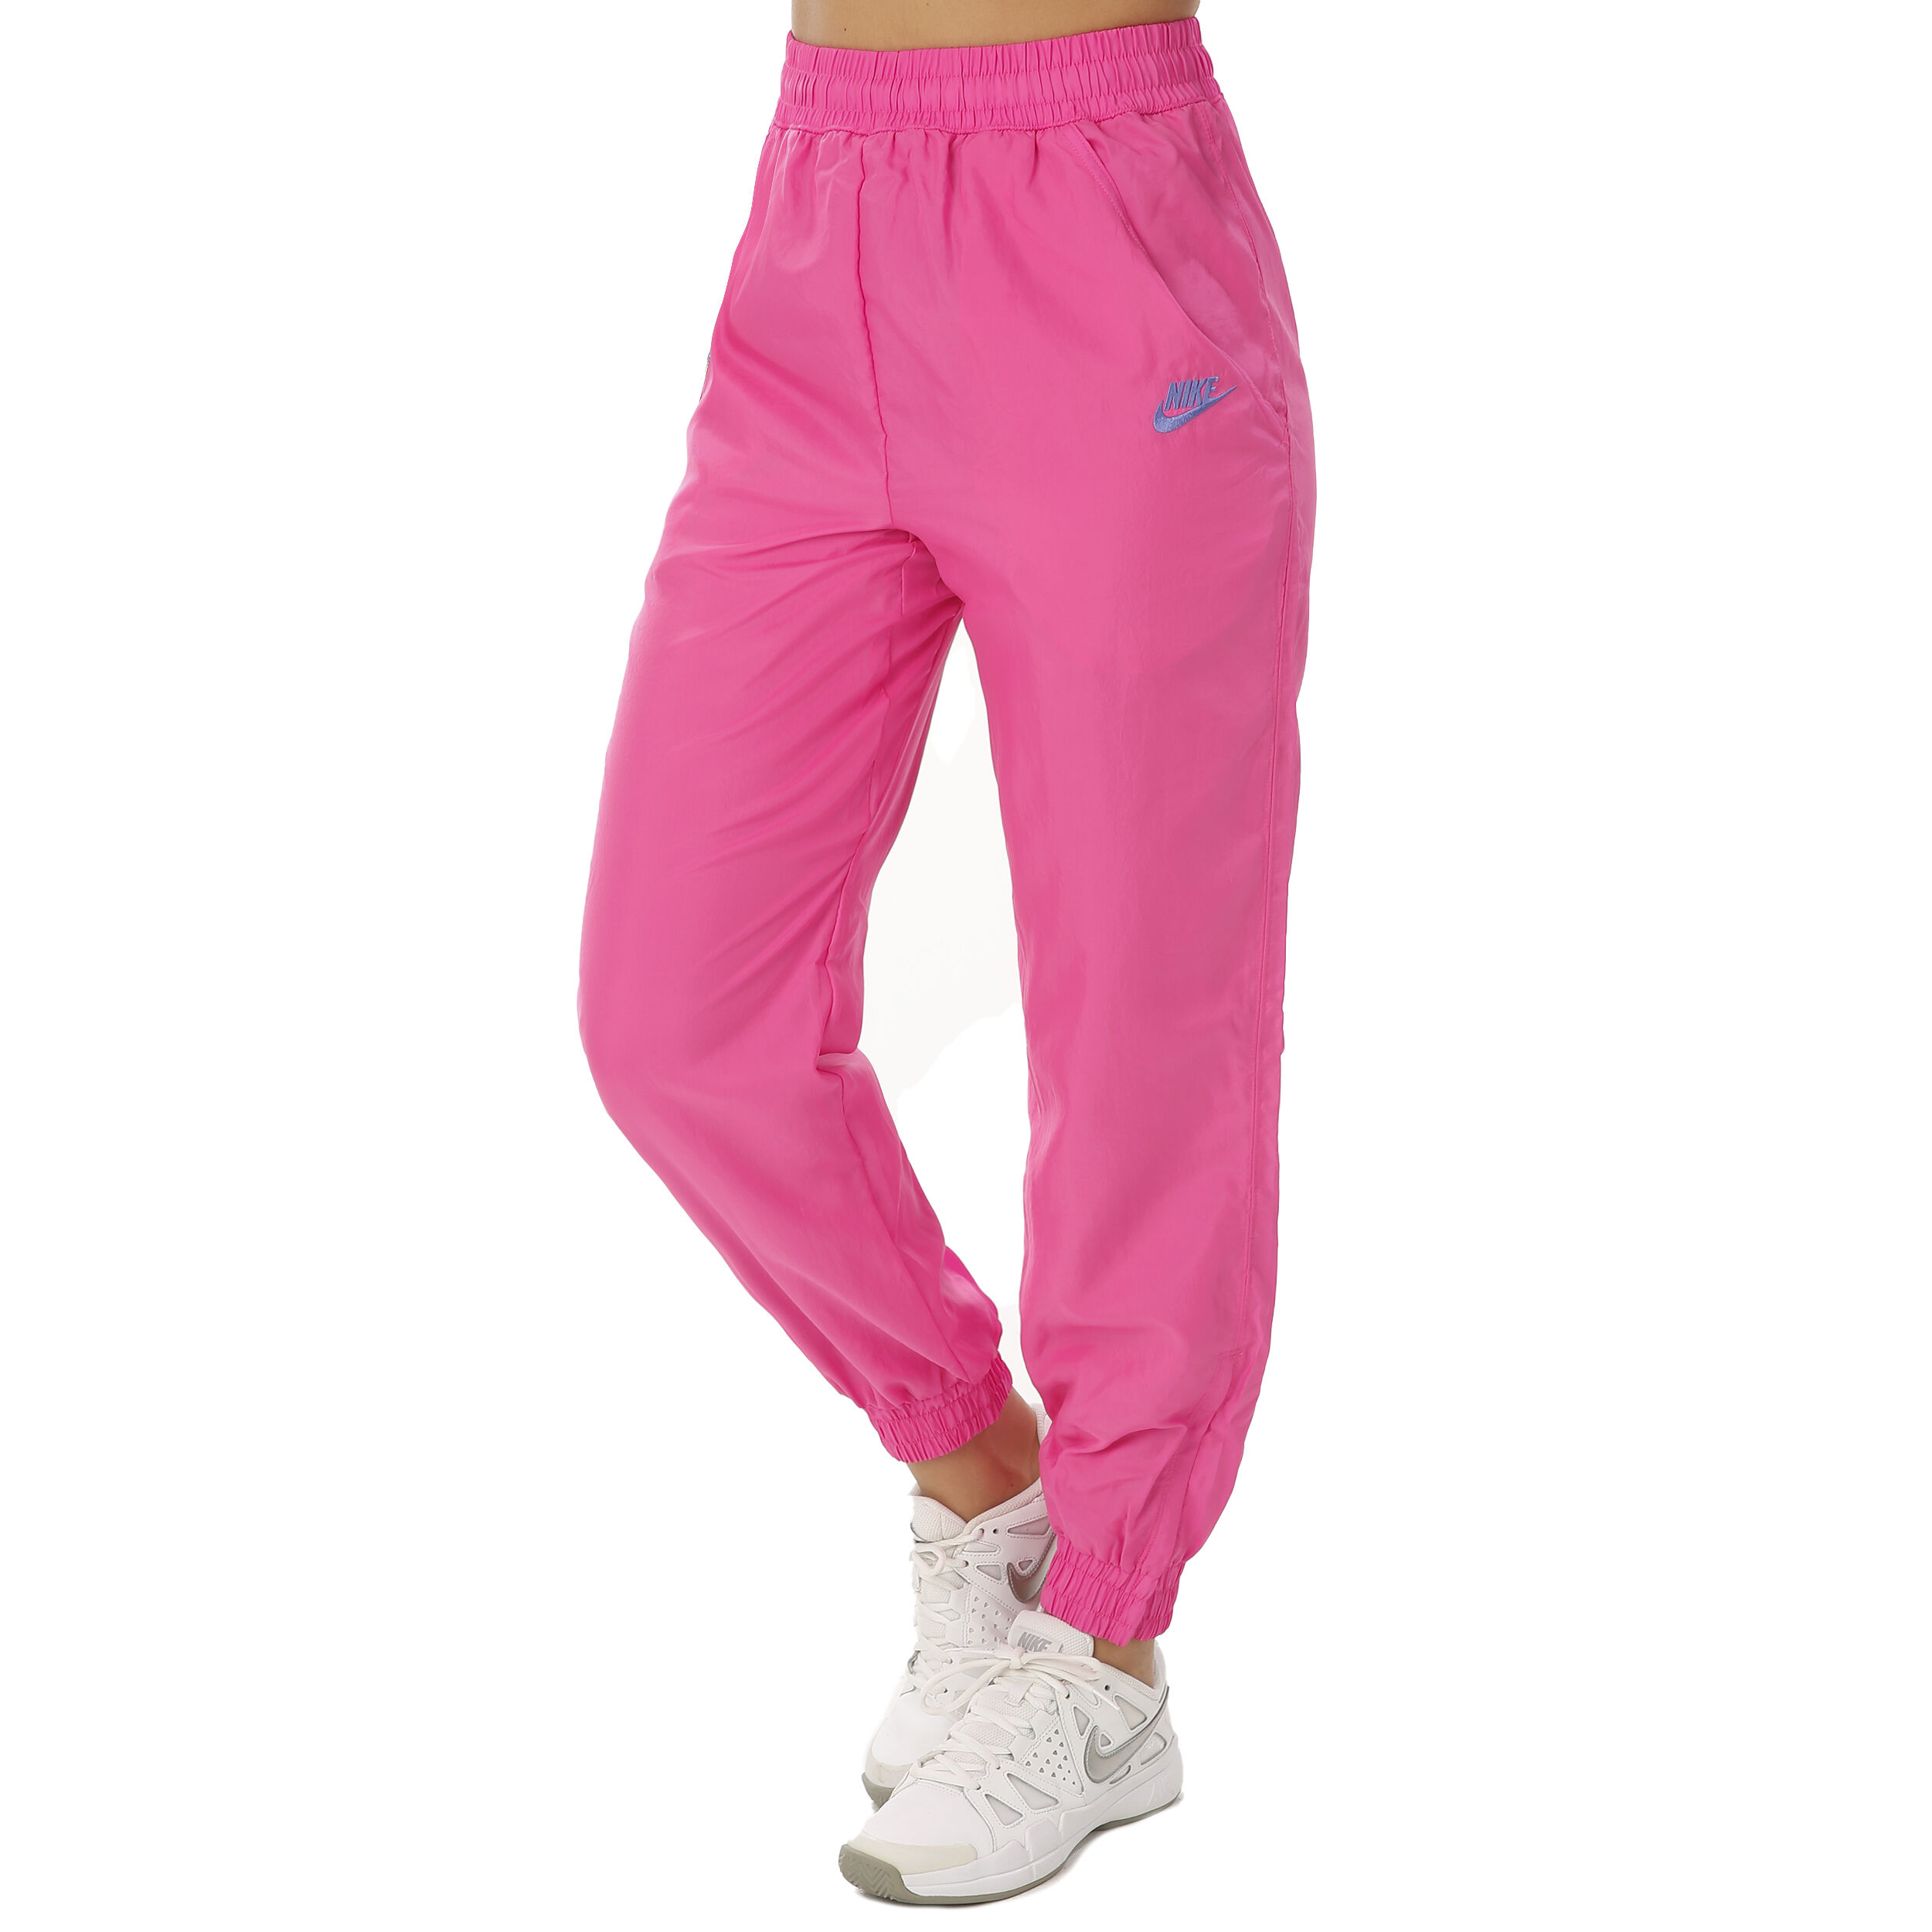 nikecourt women's tennis pants